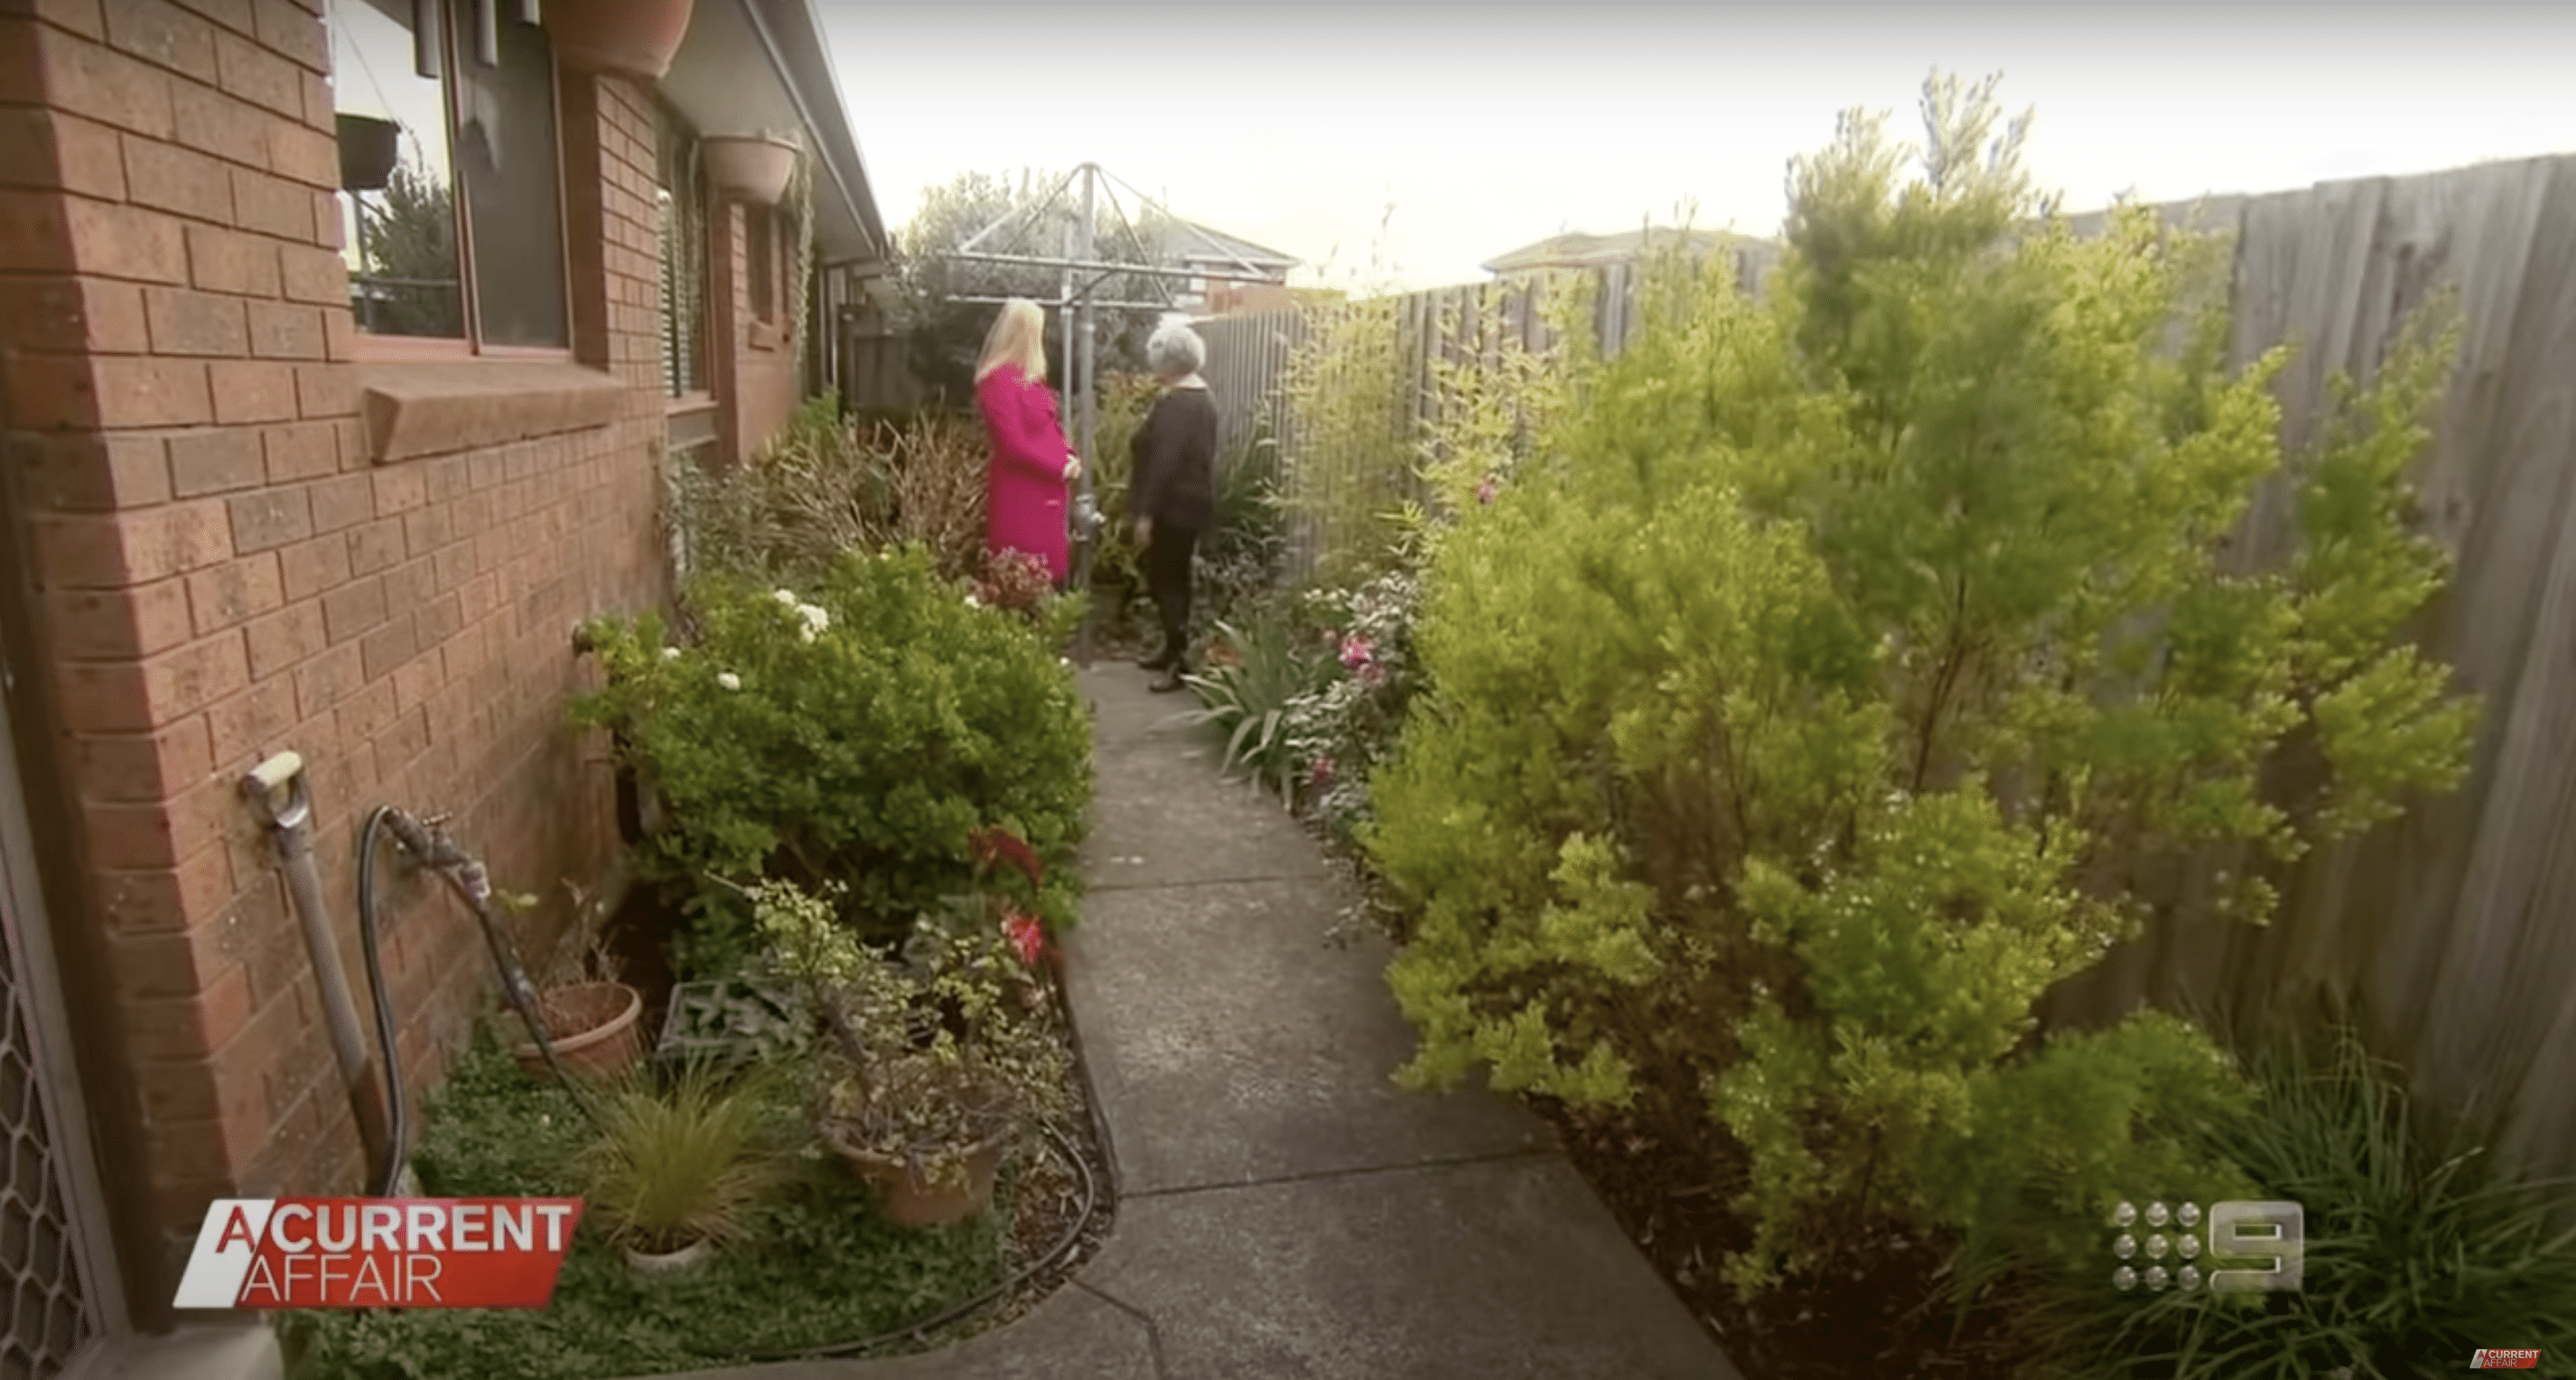 Jane Sayner con un corresponsal de noticias de "A Current Affair" en el jardín de su hogar de St Albans | Foto: YouTube.com/A Current Affair